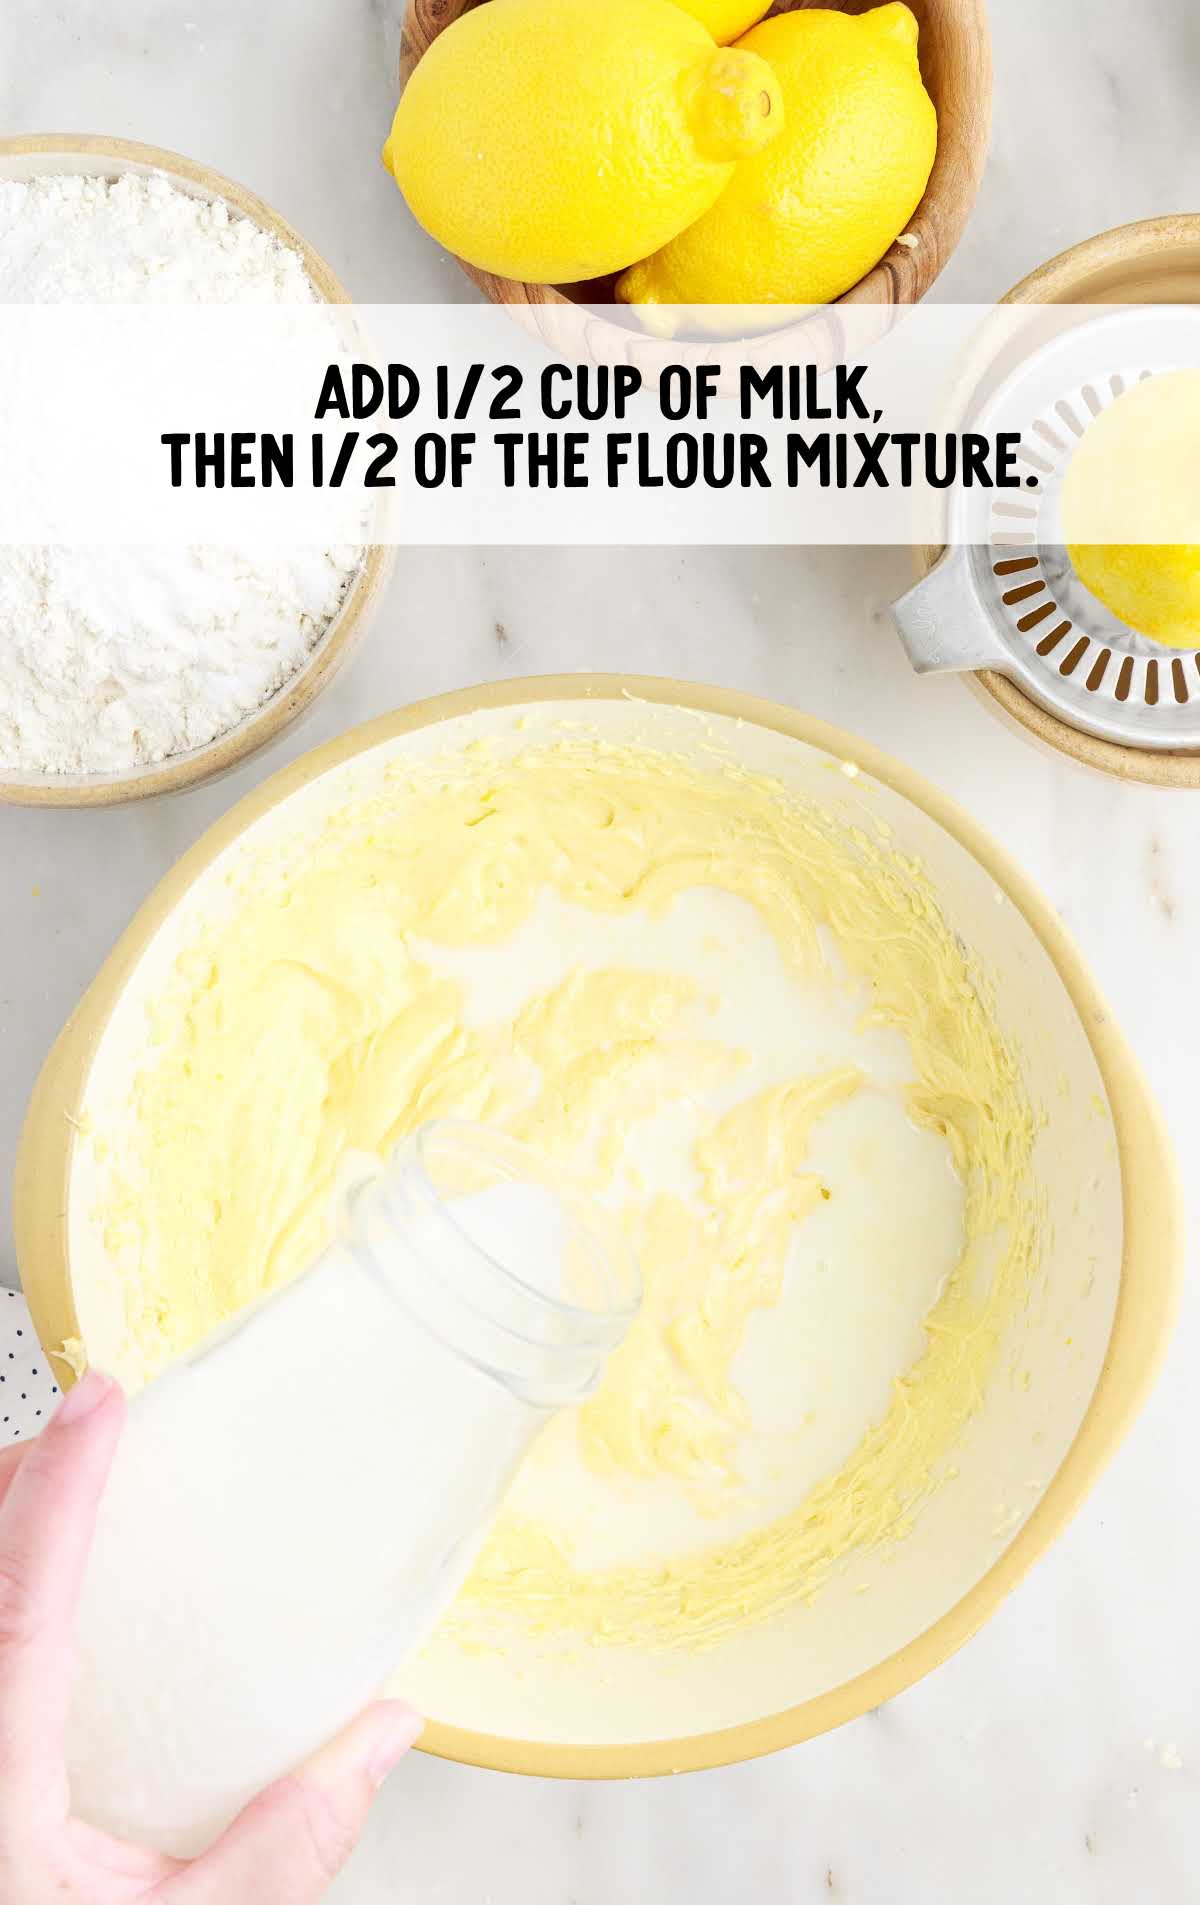 milk and flour mixture added to the lemon zest mixture